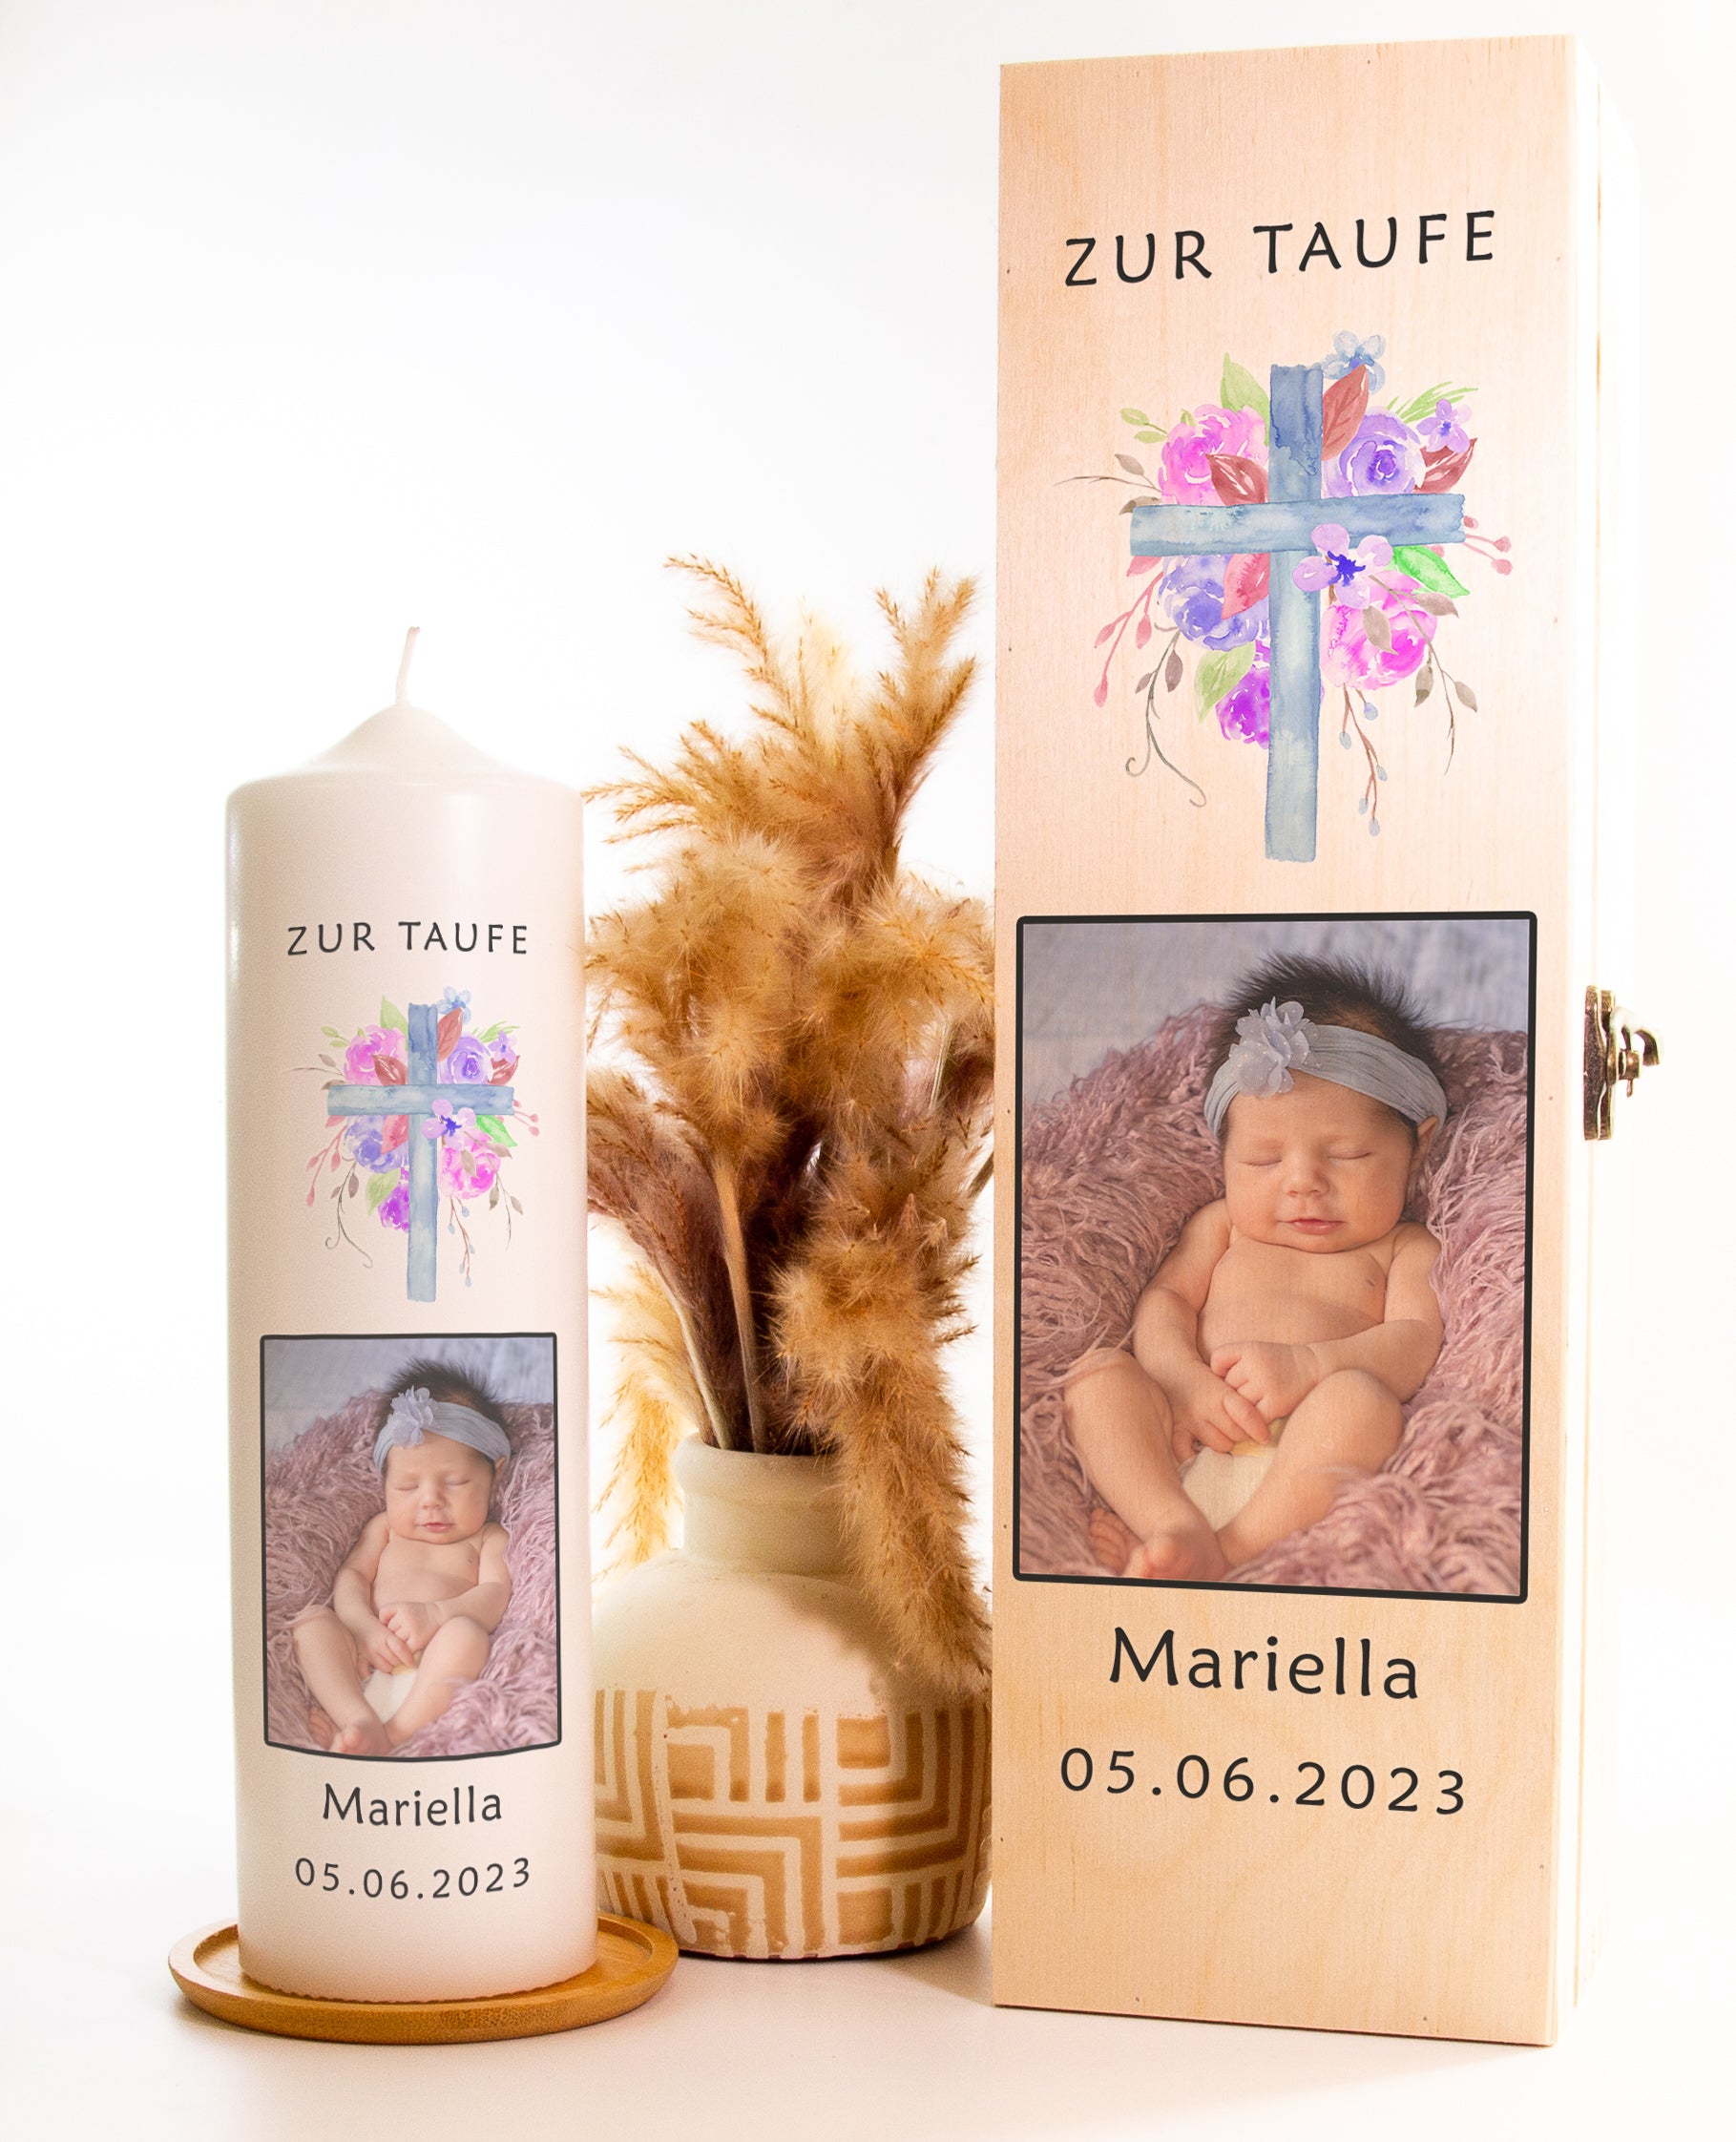 Taufkerze "Zur Taufe" - mit Namen, Geburtsdatum & Foto personalisiert